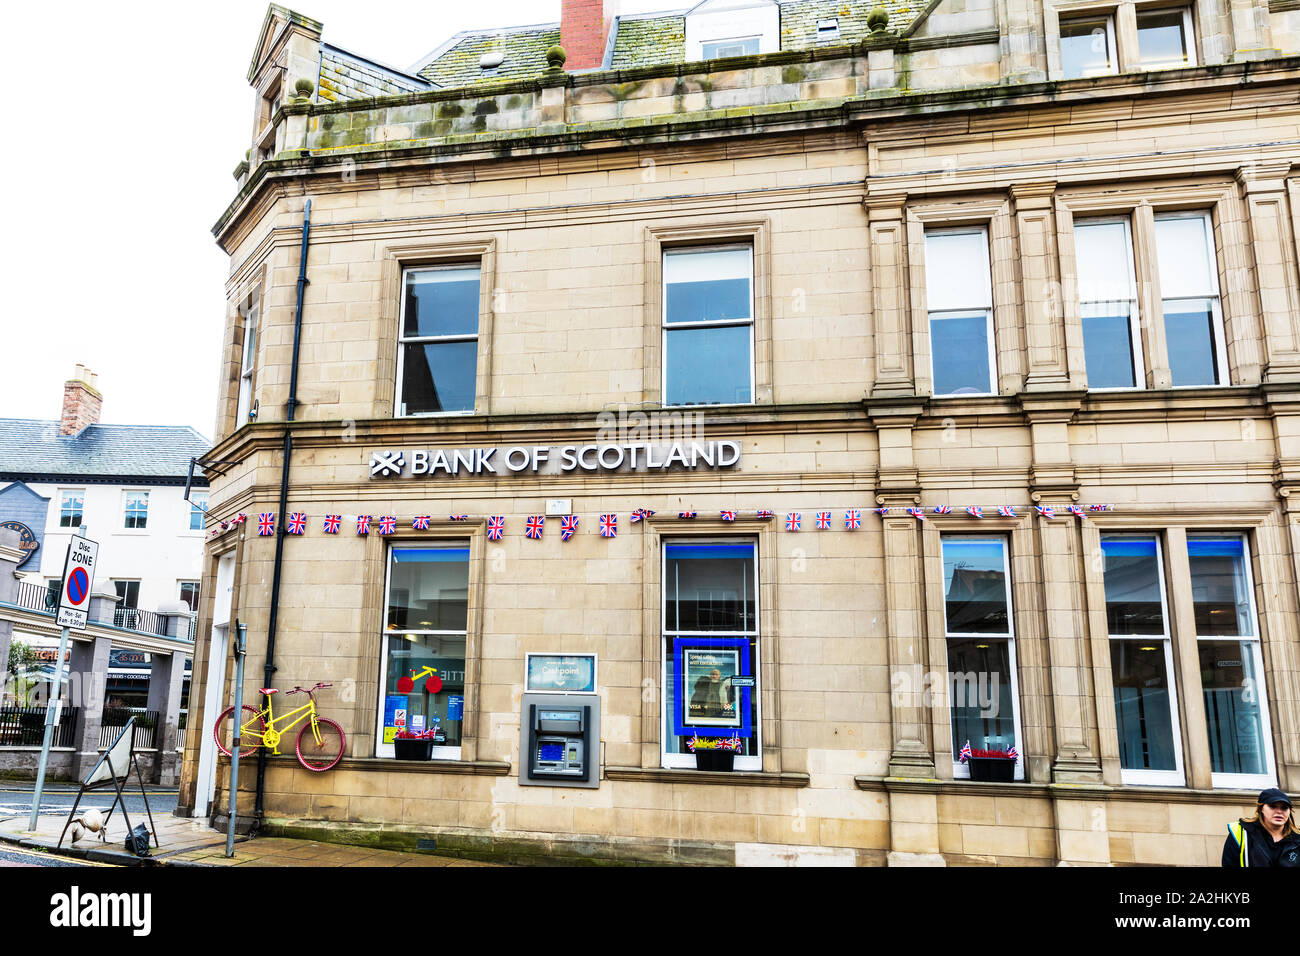 Bank Of Scotland cashpoint machine, berwick upon tweed, Northumberland, UK, England, ATM, ATM machine, Bank Of Scotland, logo, high street bank Stock Photo